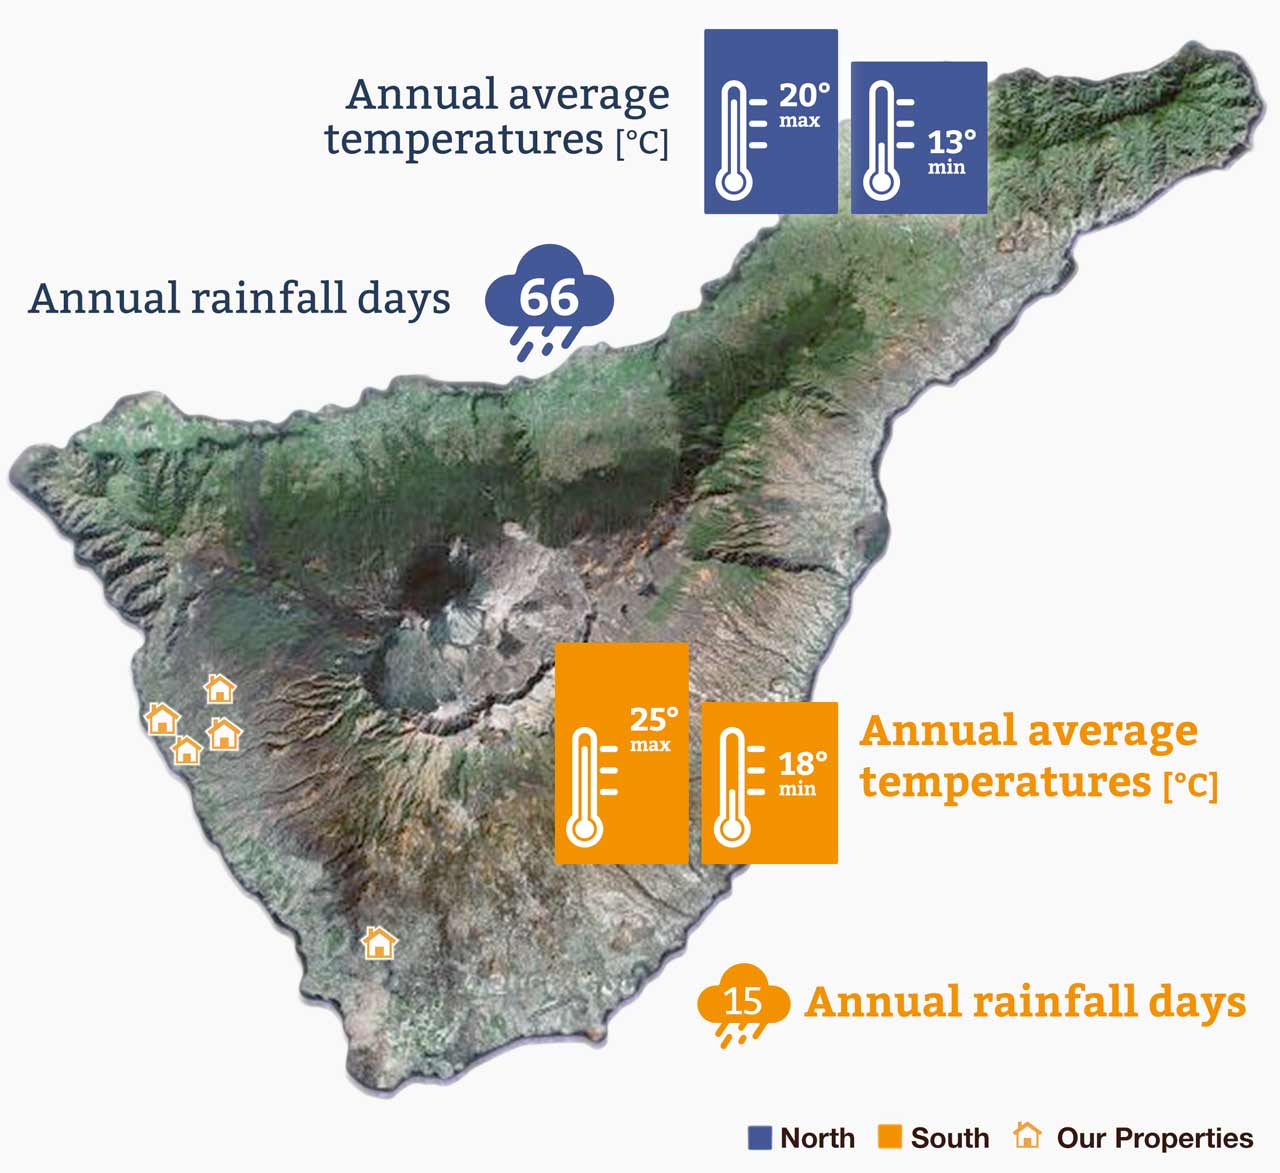 Climate data in Tenerife